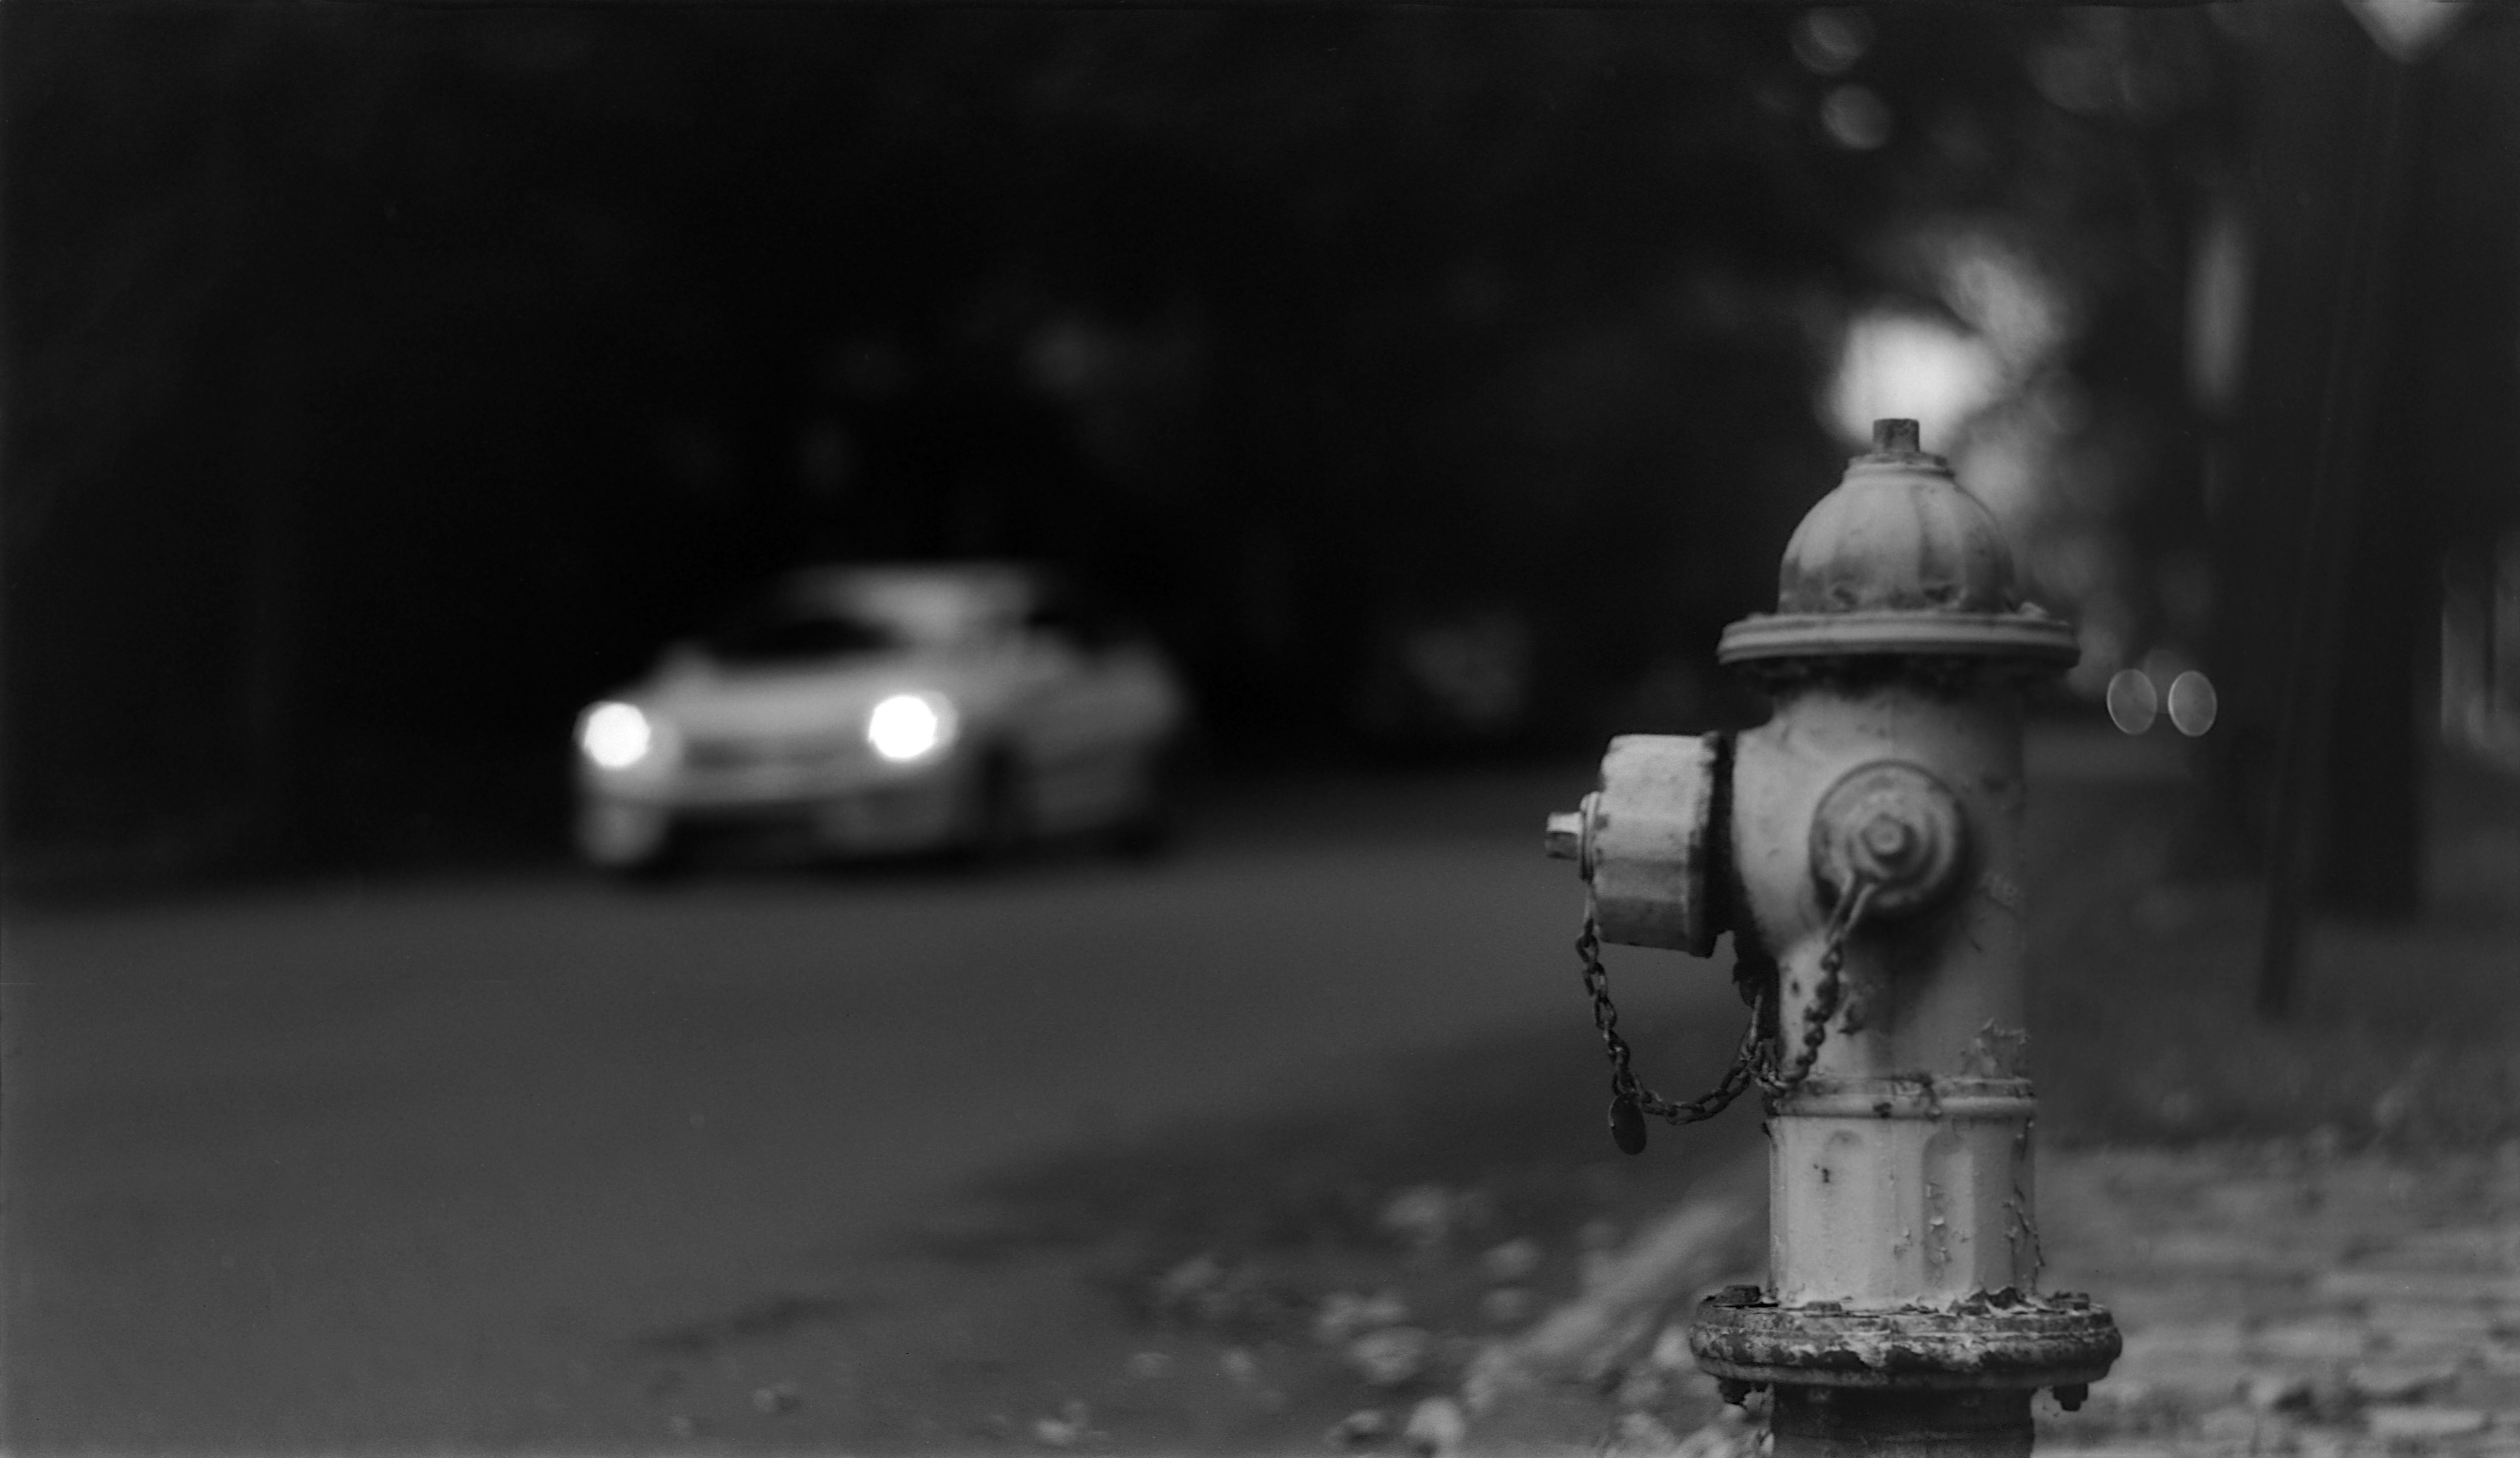 Plus-X 6x10 hydrant with car